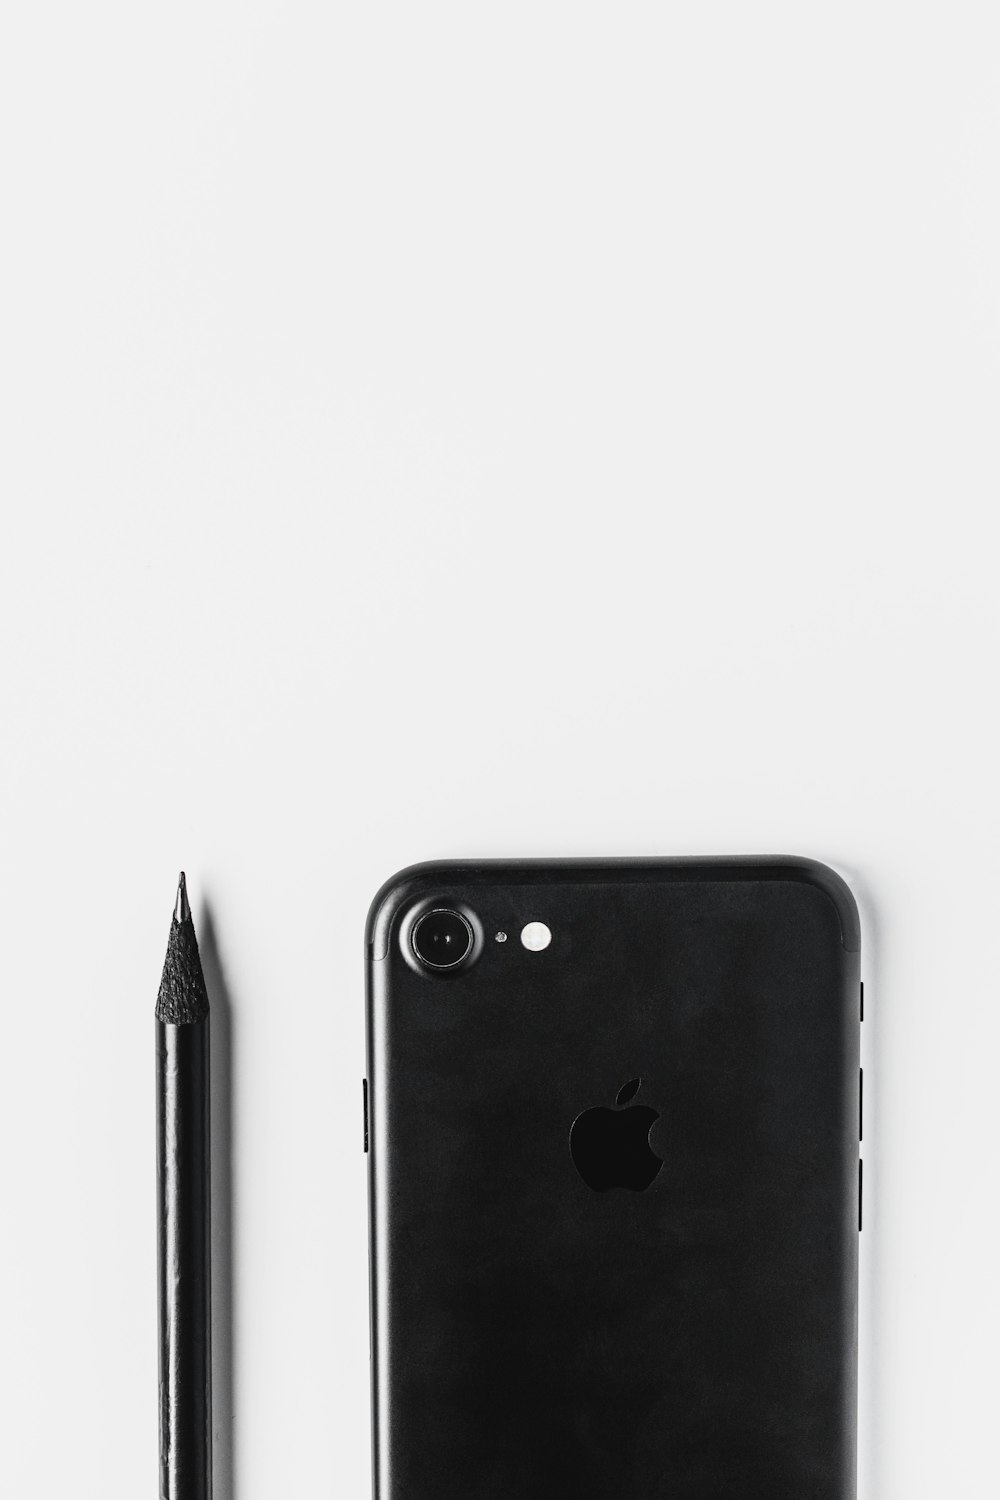 black iphone 7 plus beside black pen